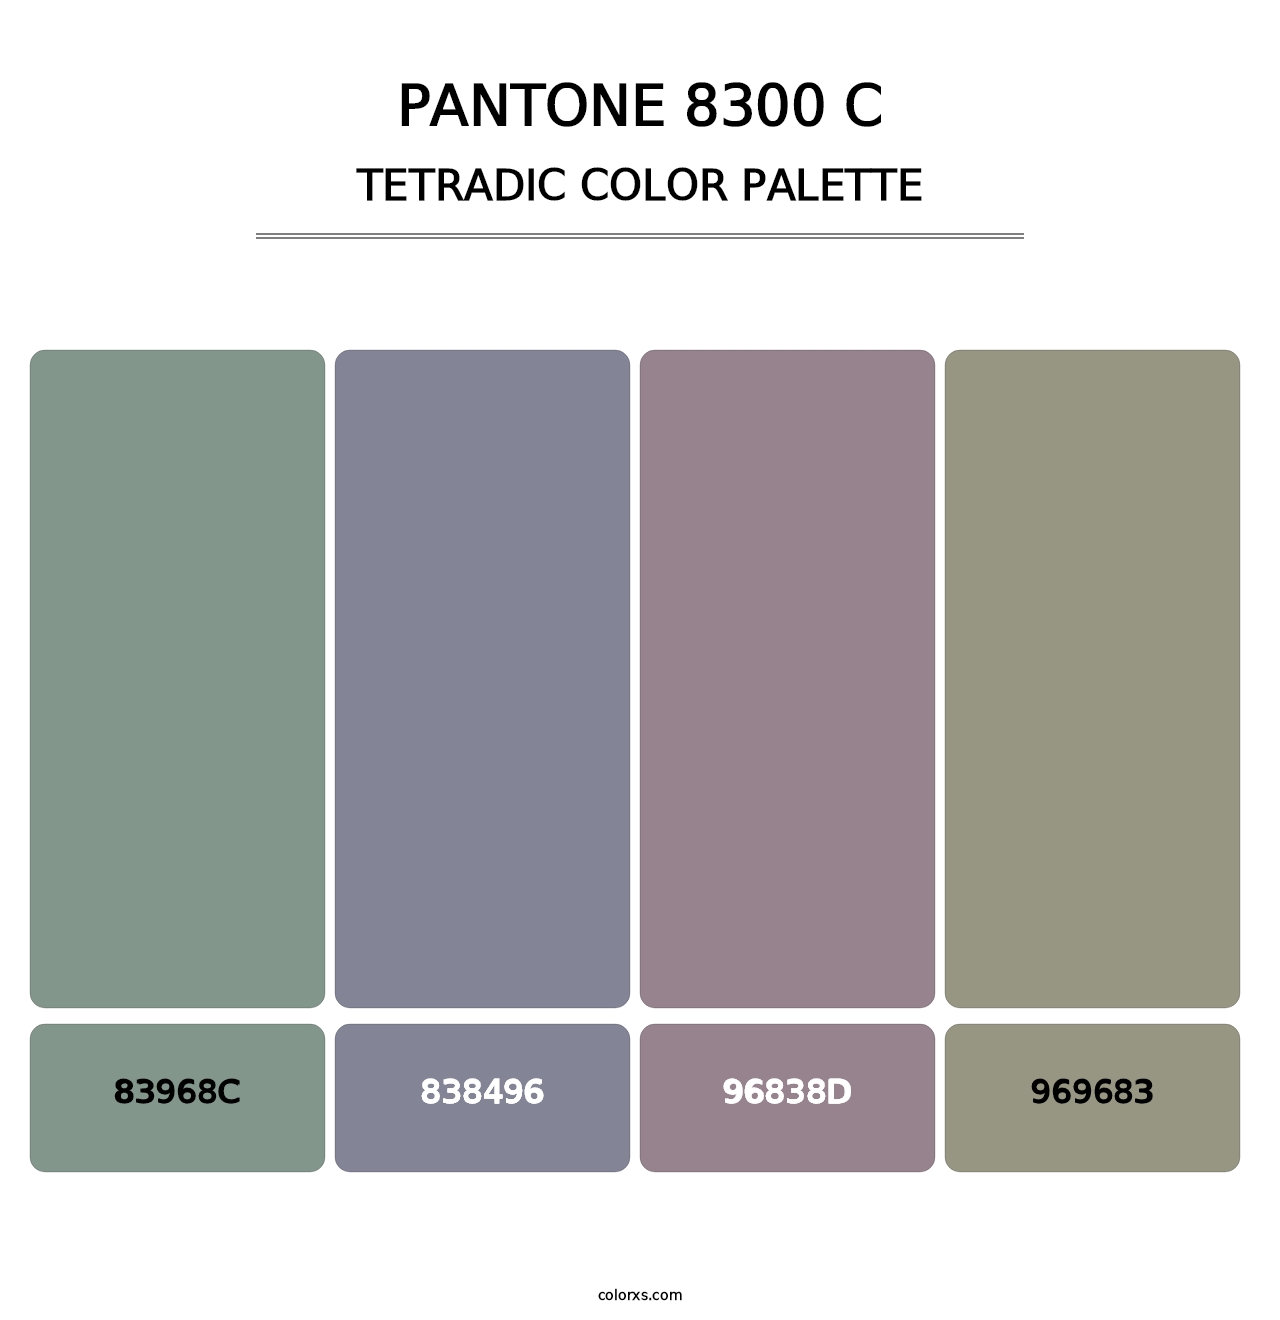 PANTONE 8300 C - Tetradic Color Palette